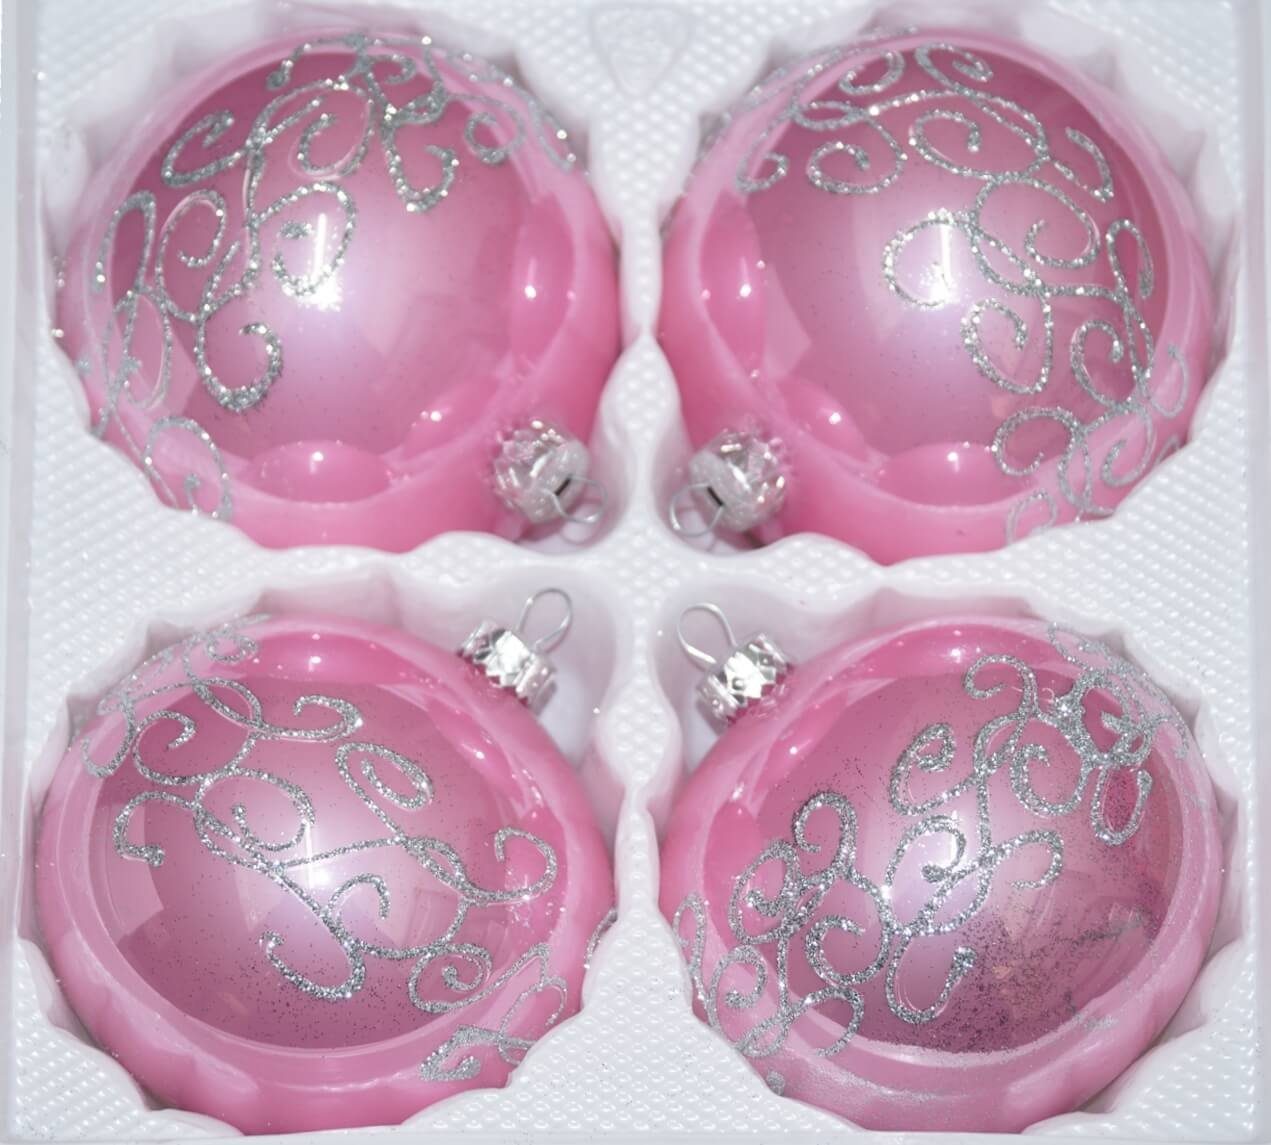 Navidacio "Hochgl.-Rosa-Silber-Ornamente" 4tlg. Weihnachtsbaumkugel Set Glas-Weihnachtskugel Ø 12cm